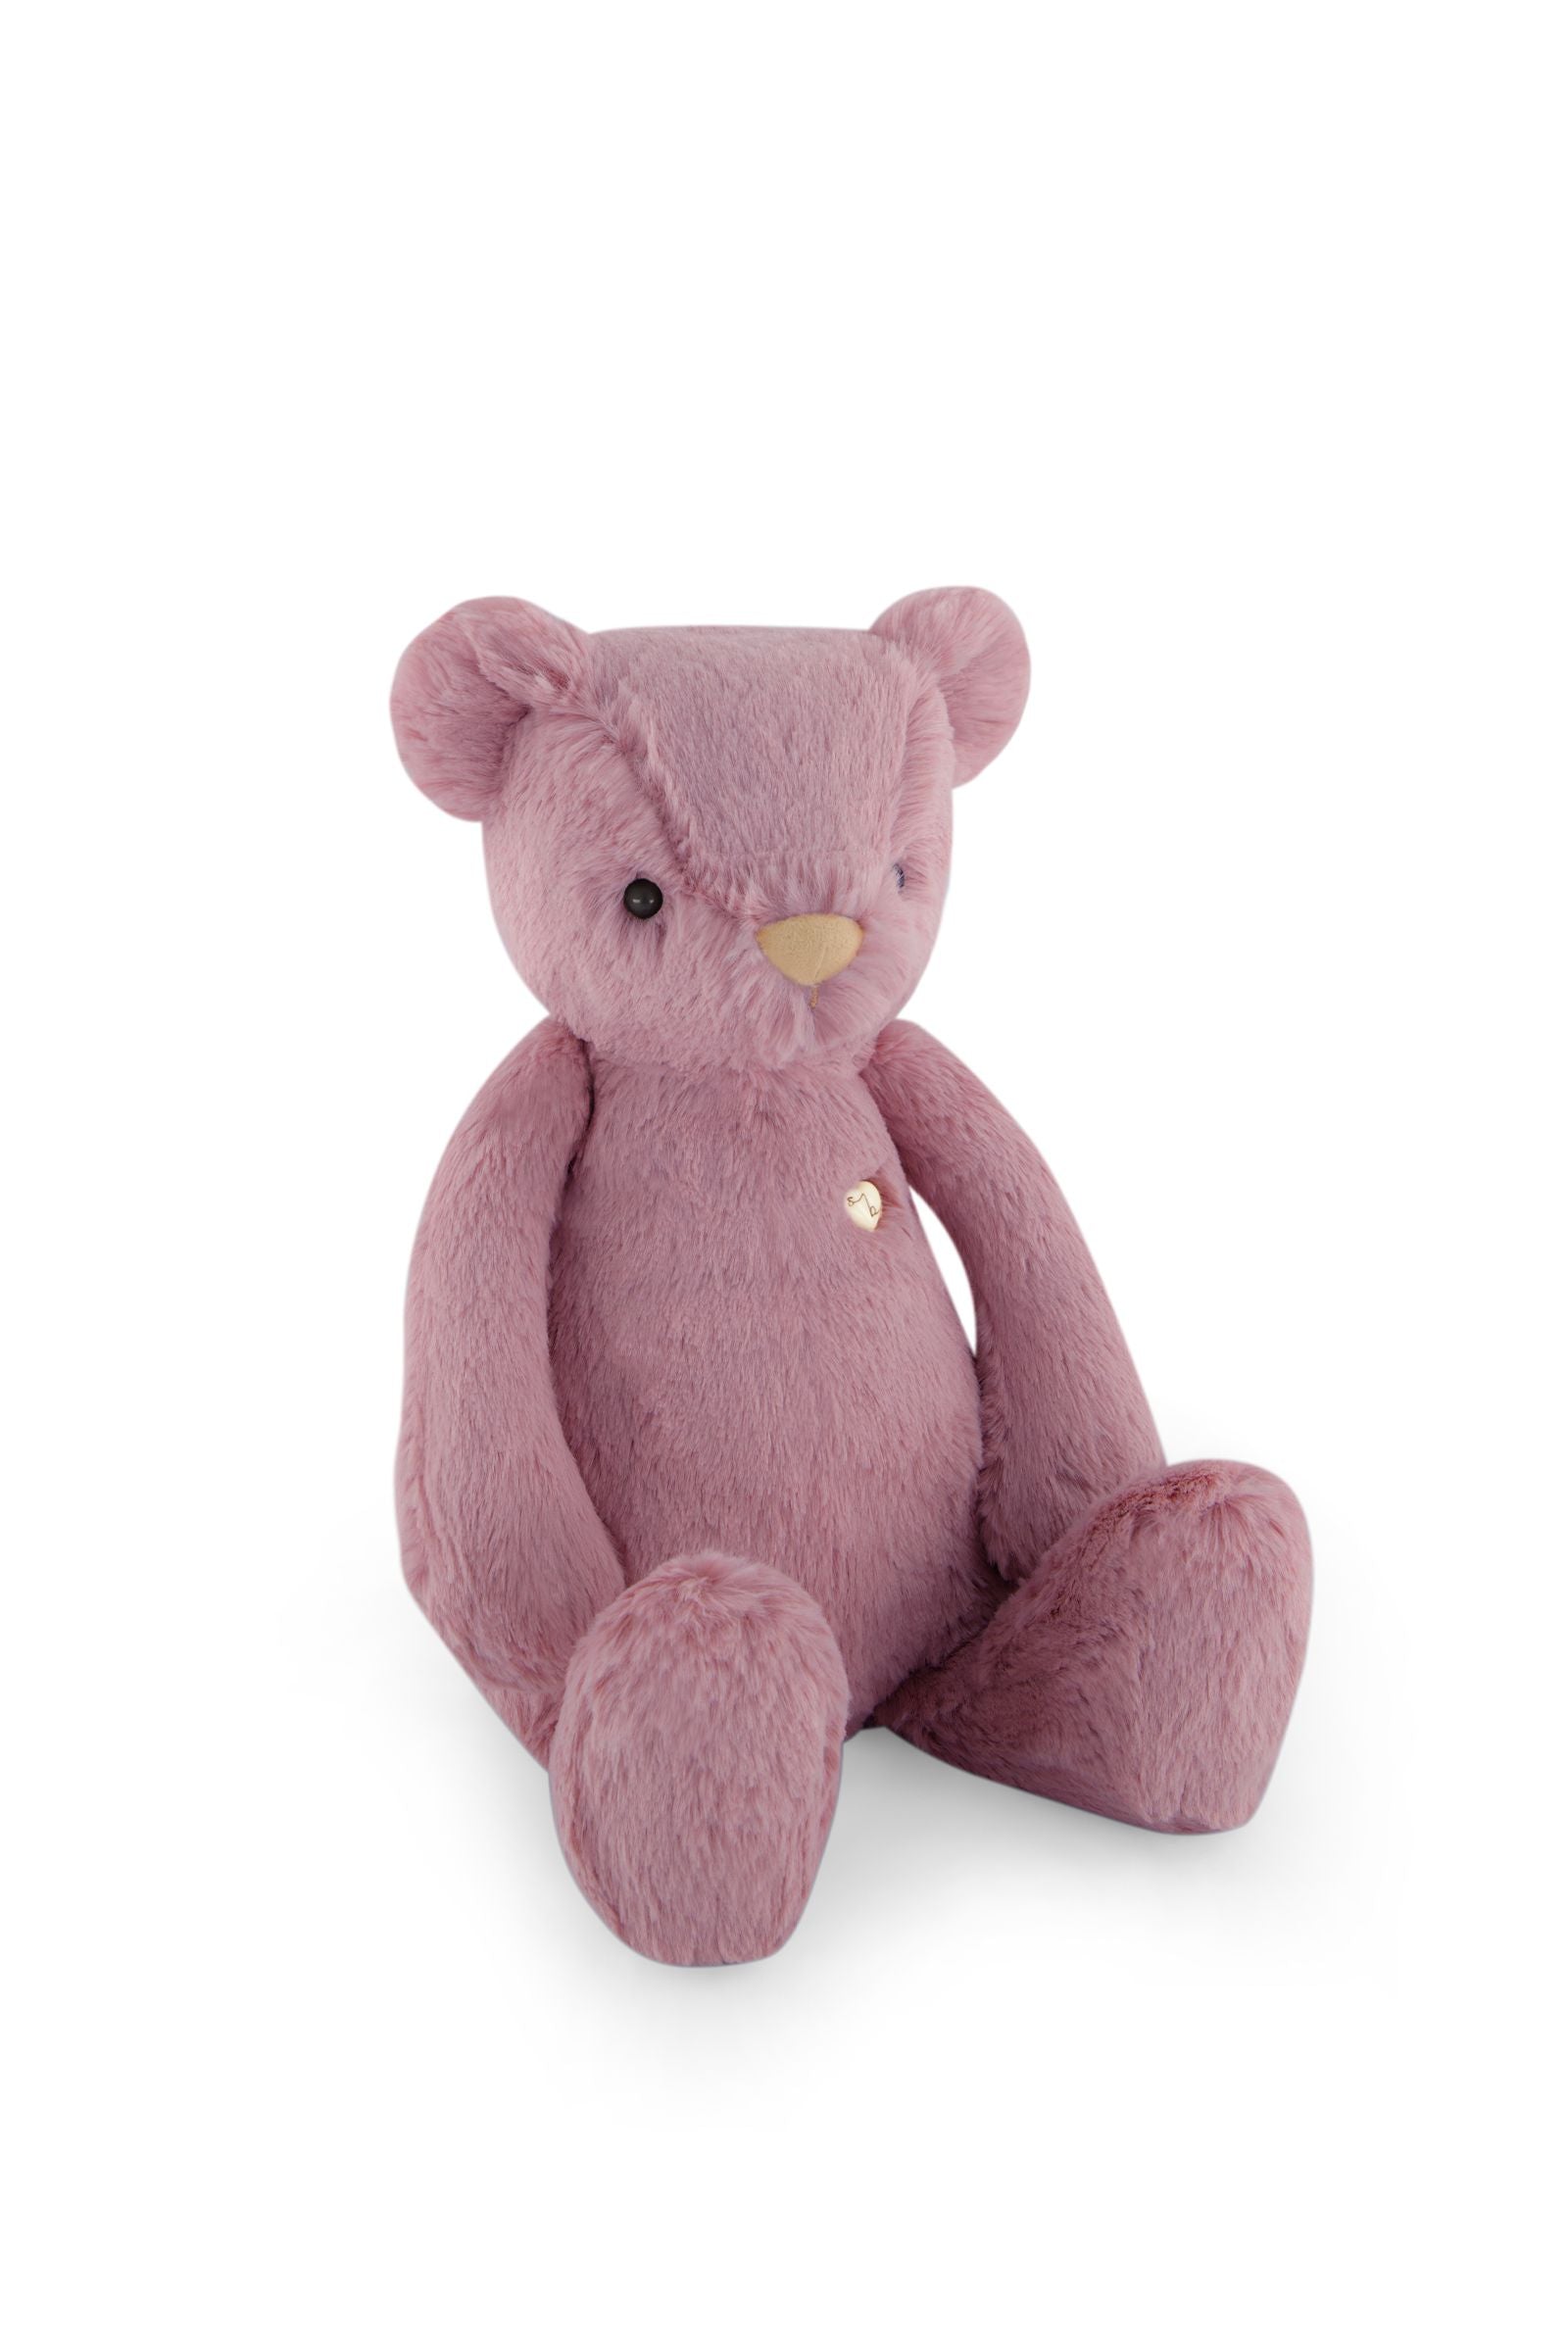 Snuggle Bunnies - George the Bear - Lilium 30cm-Toys-Jamie Kay-The Bay Room